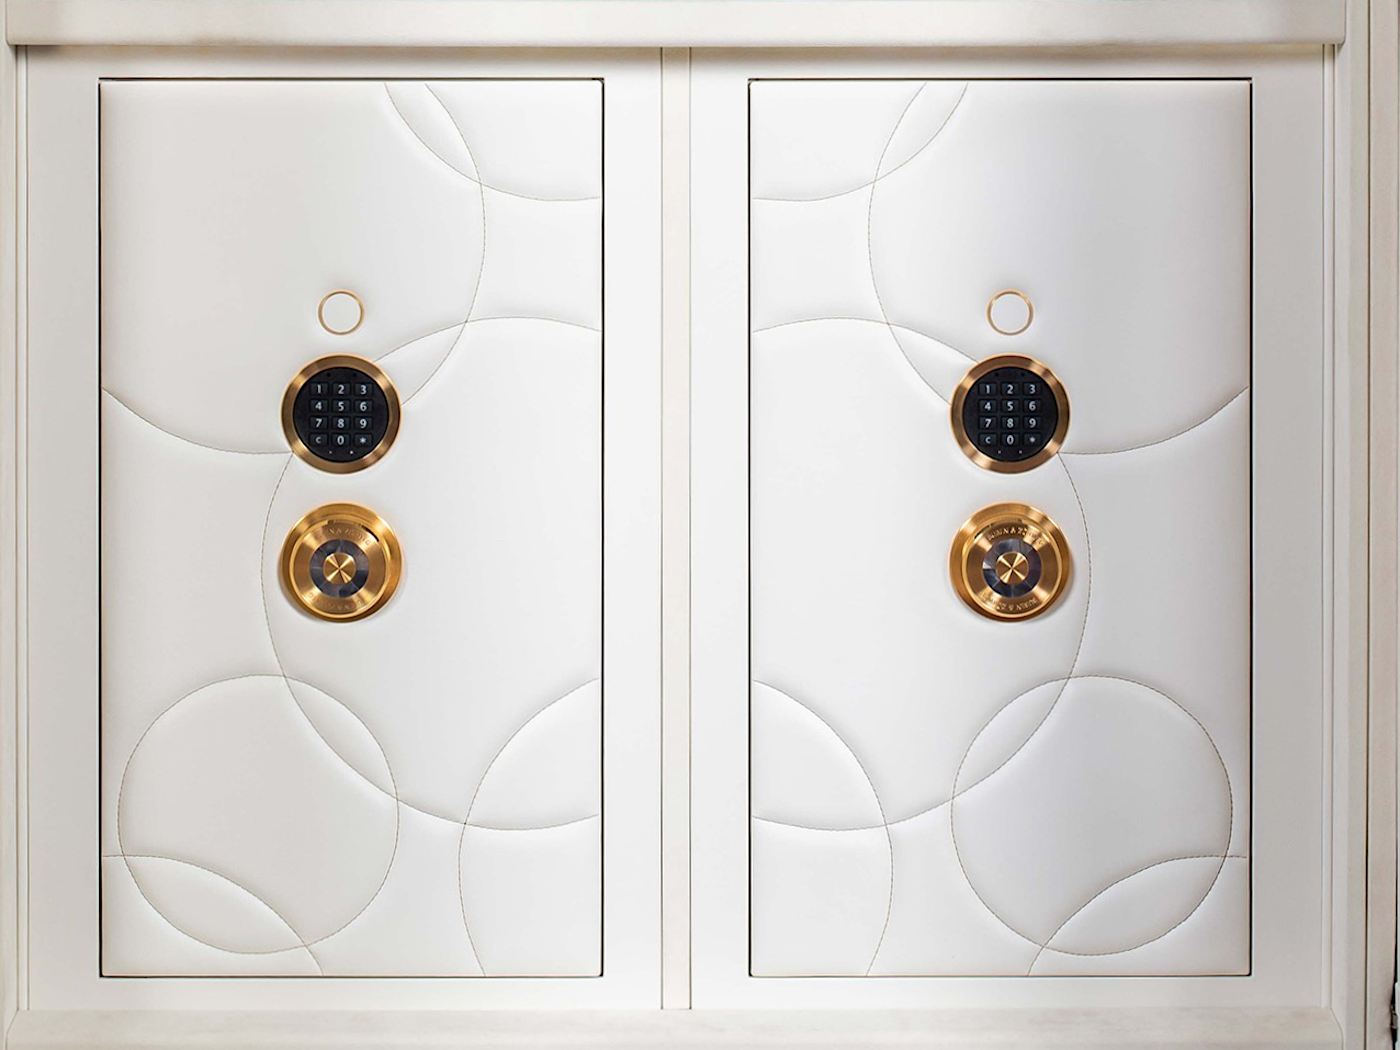 Two high-security safes with circle emblem — BUBEN&ZORWEG